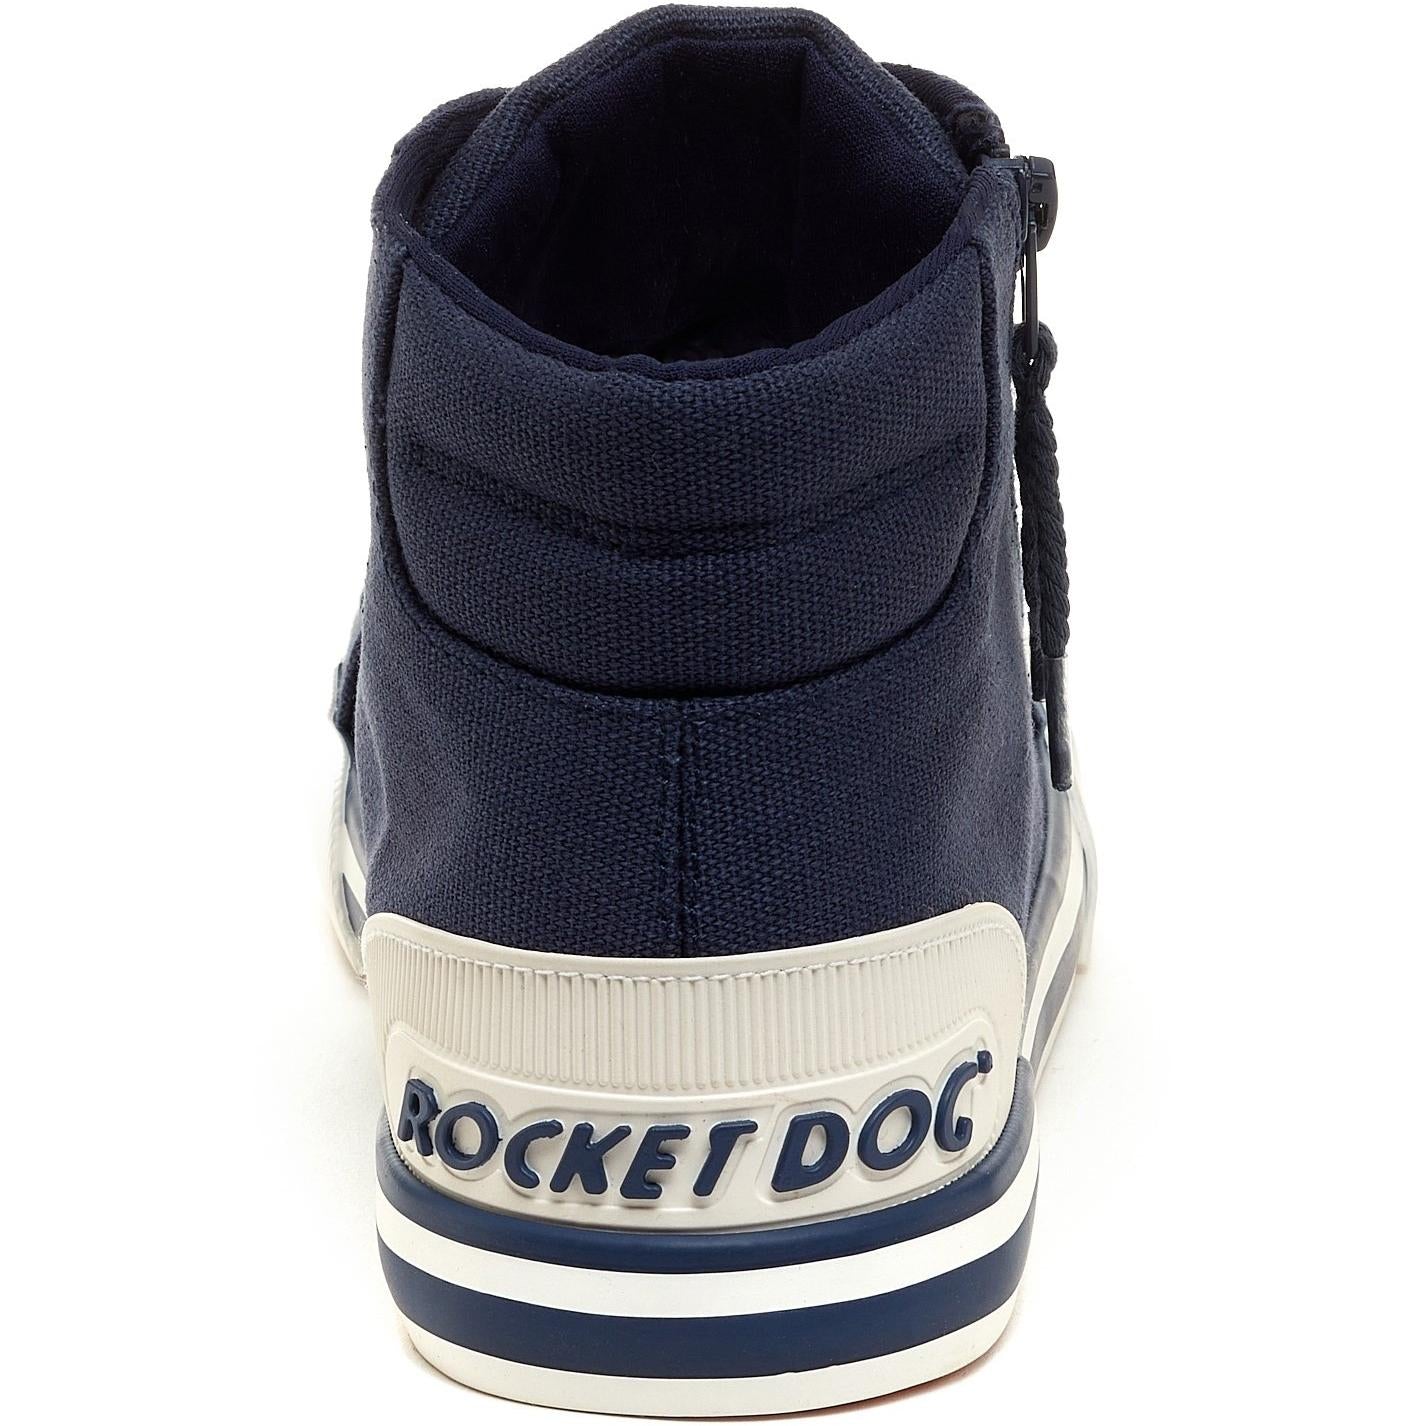 Rocket Dog Jazzin Hi Shoes